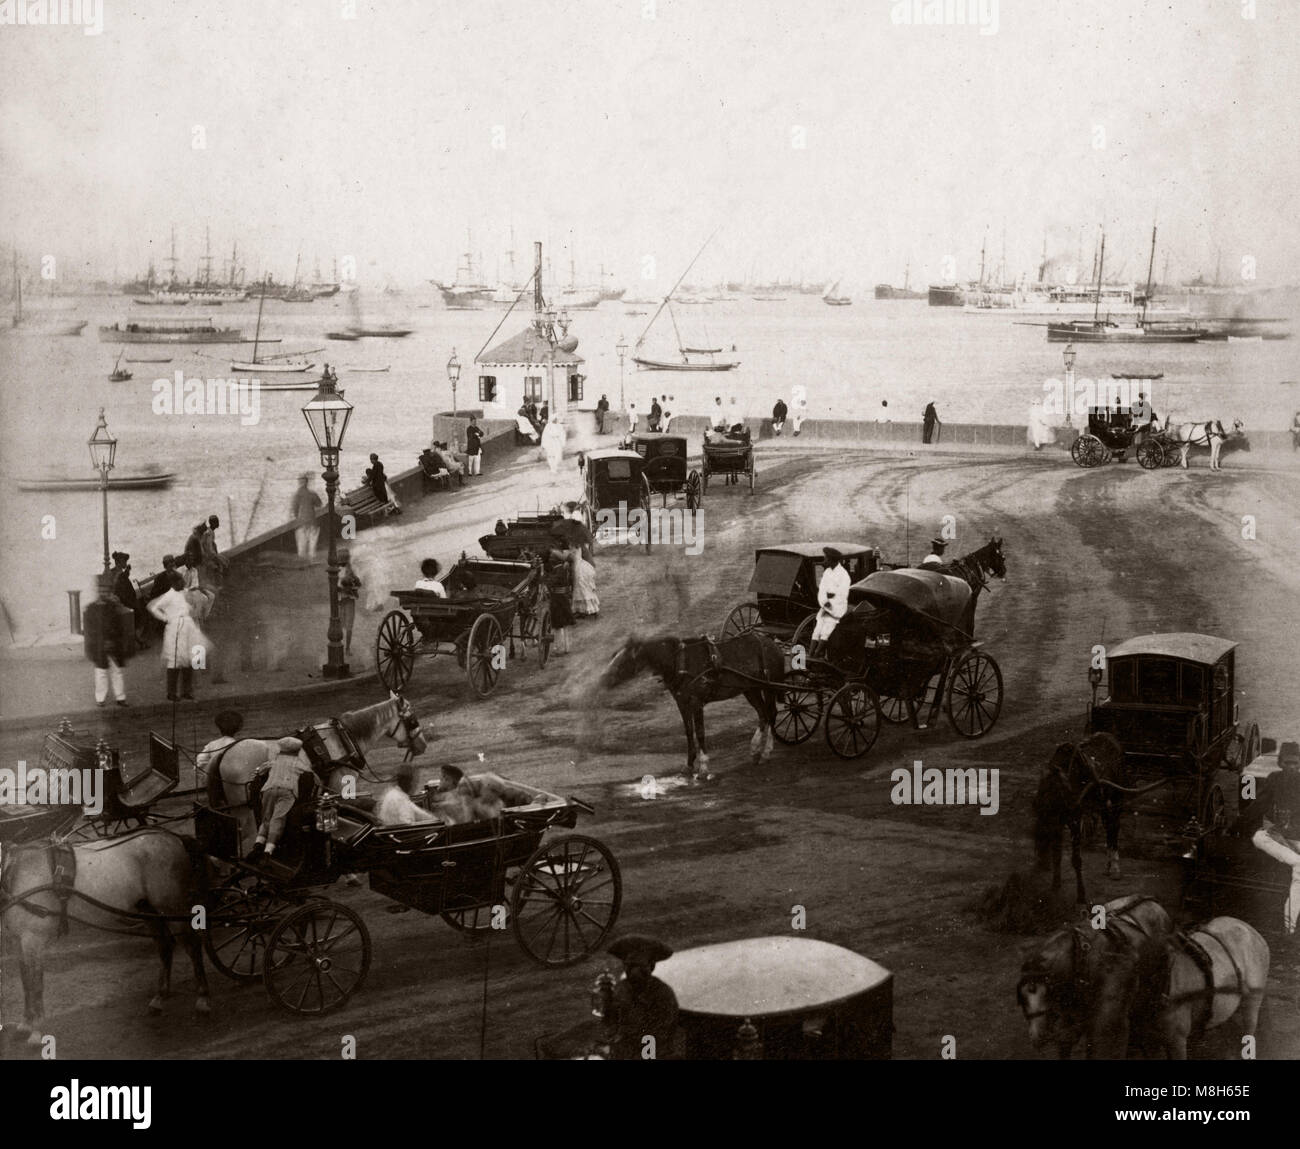 c.1880s India - dock of Apollo Bunder - hackney carriages Bombay Mumbai Stock Photo